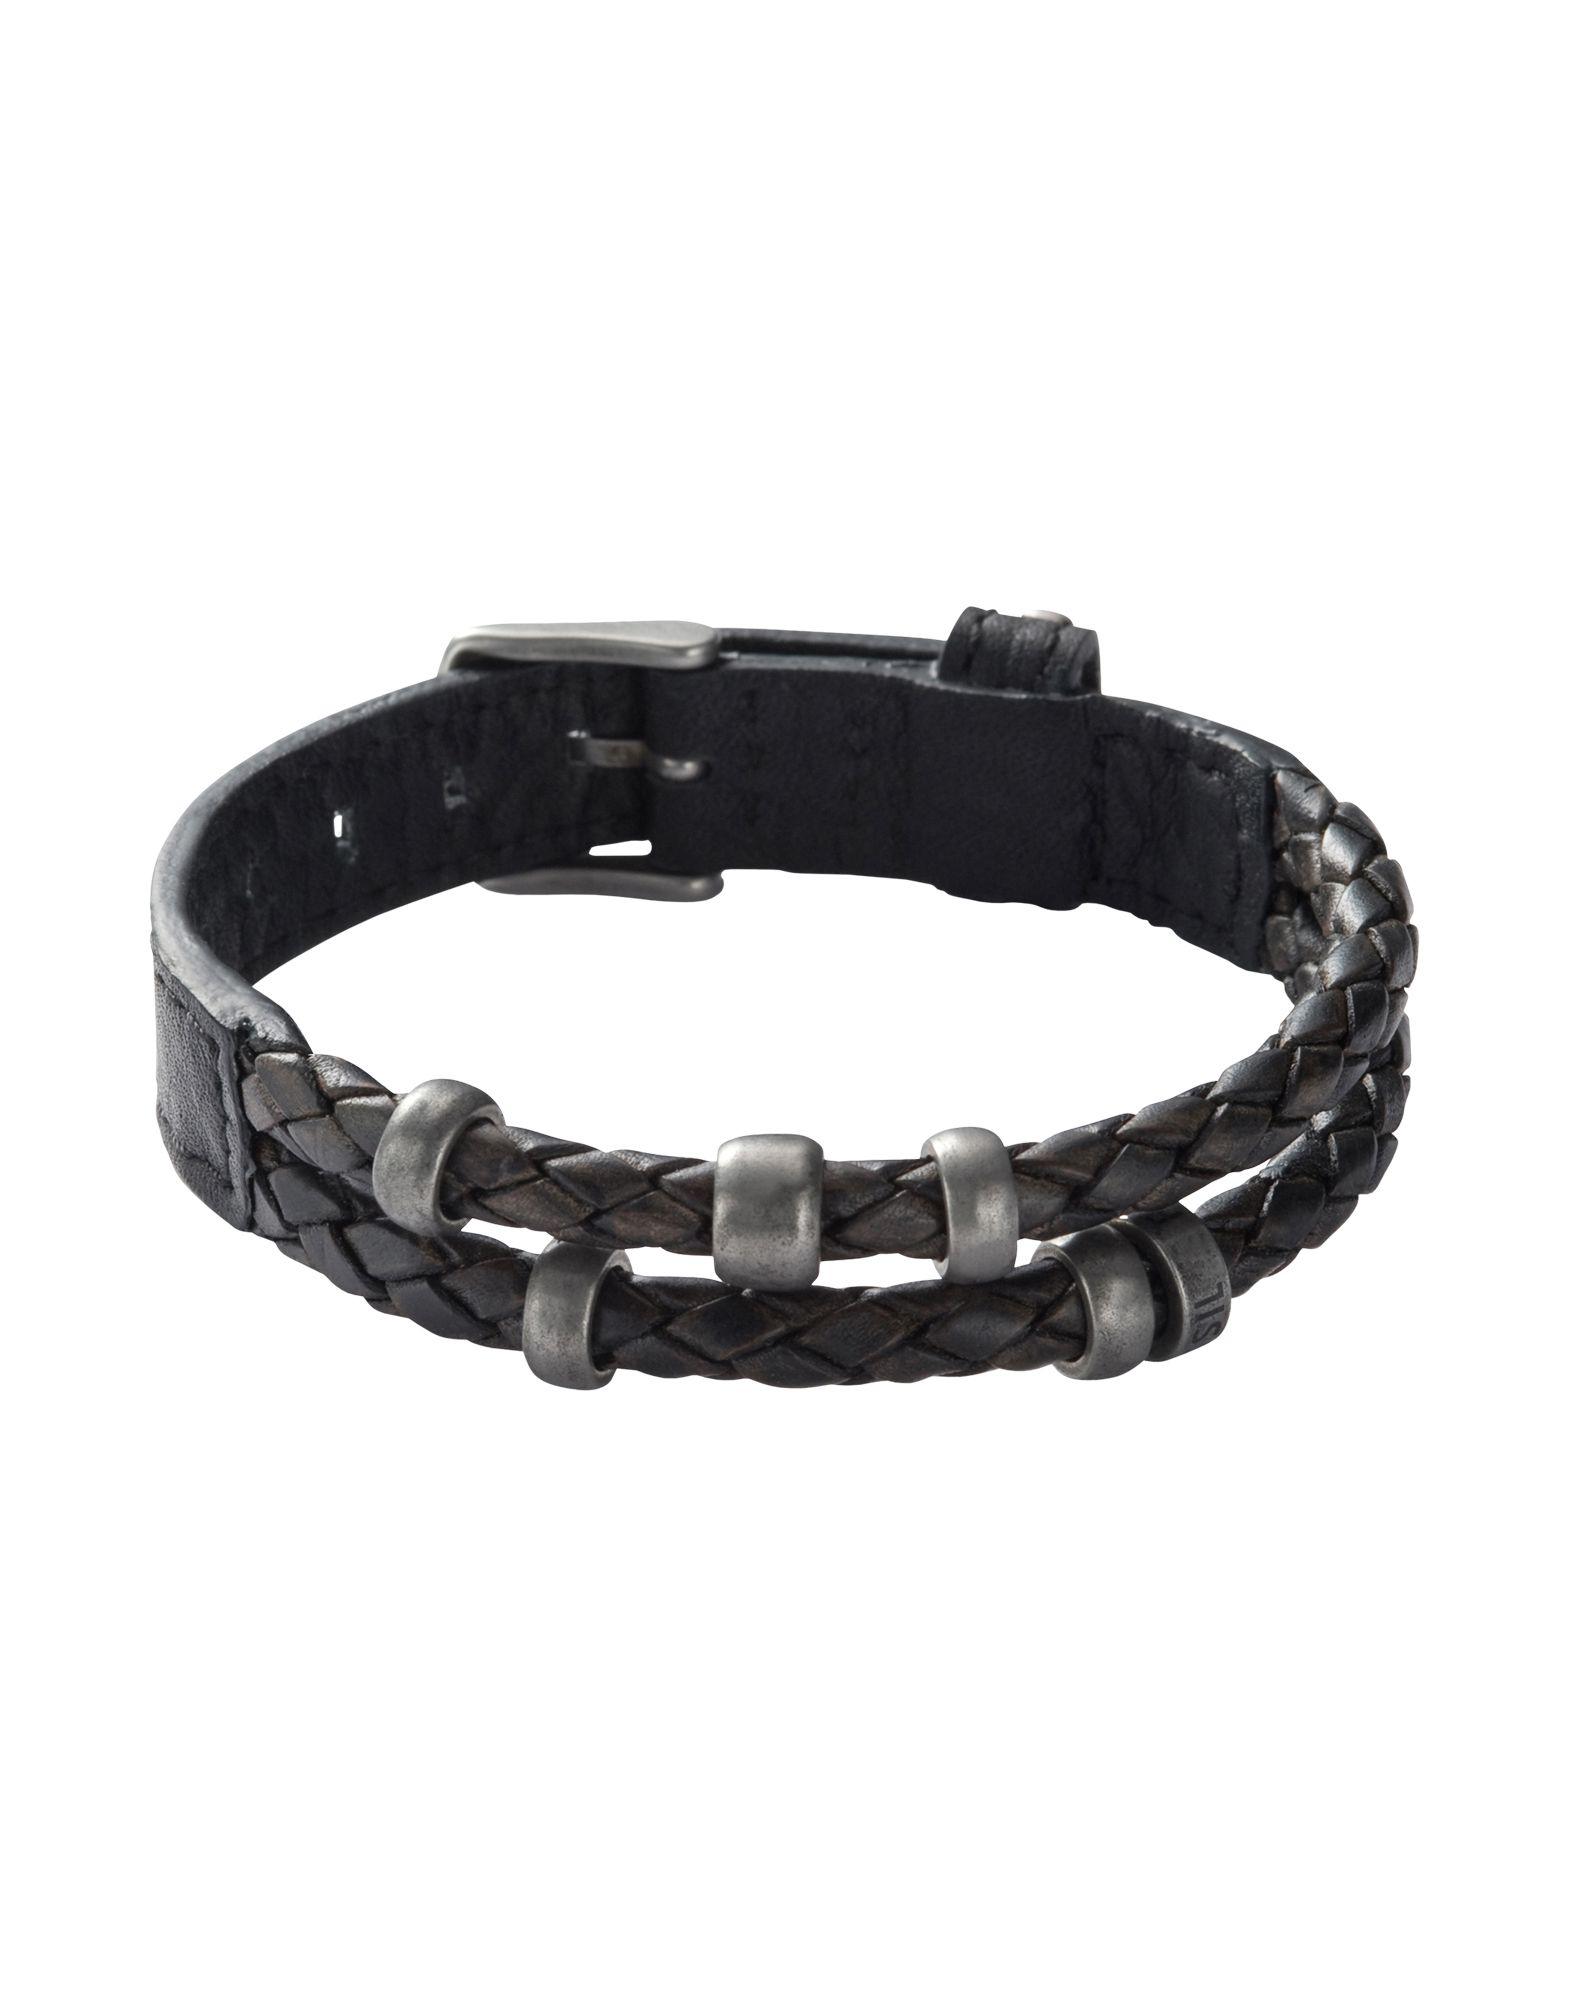 Fossil Leather Bracelet in Black for Men - Lyst